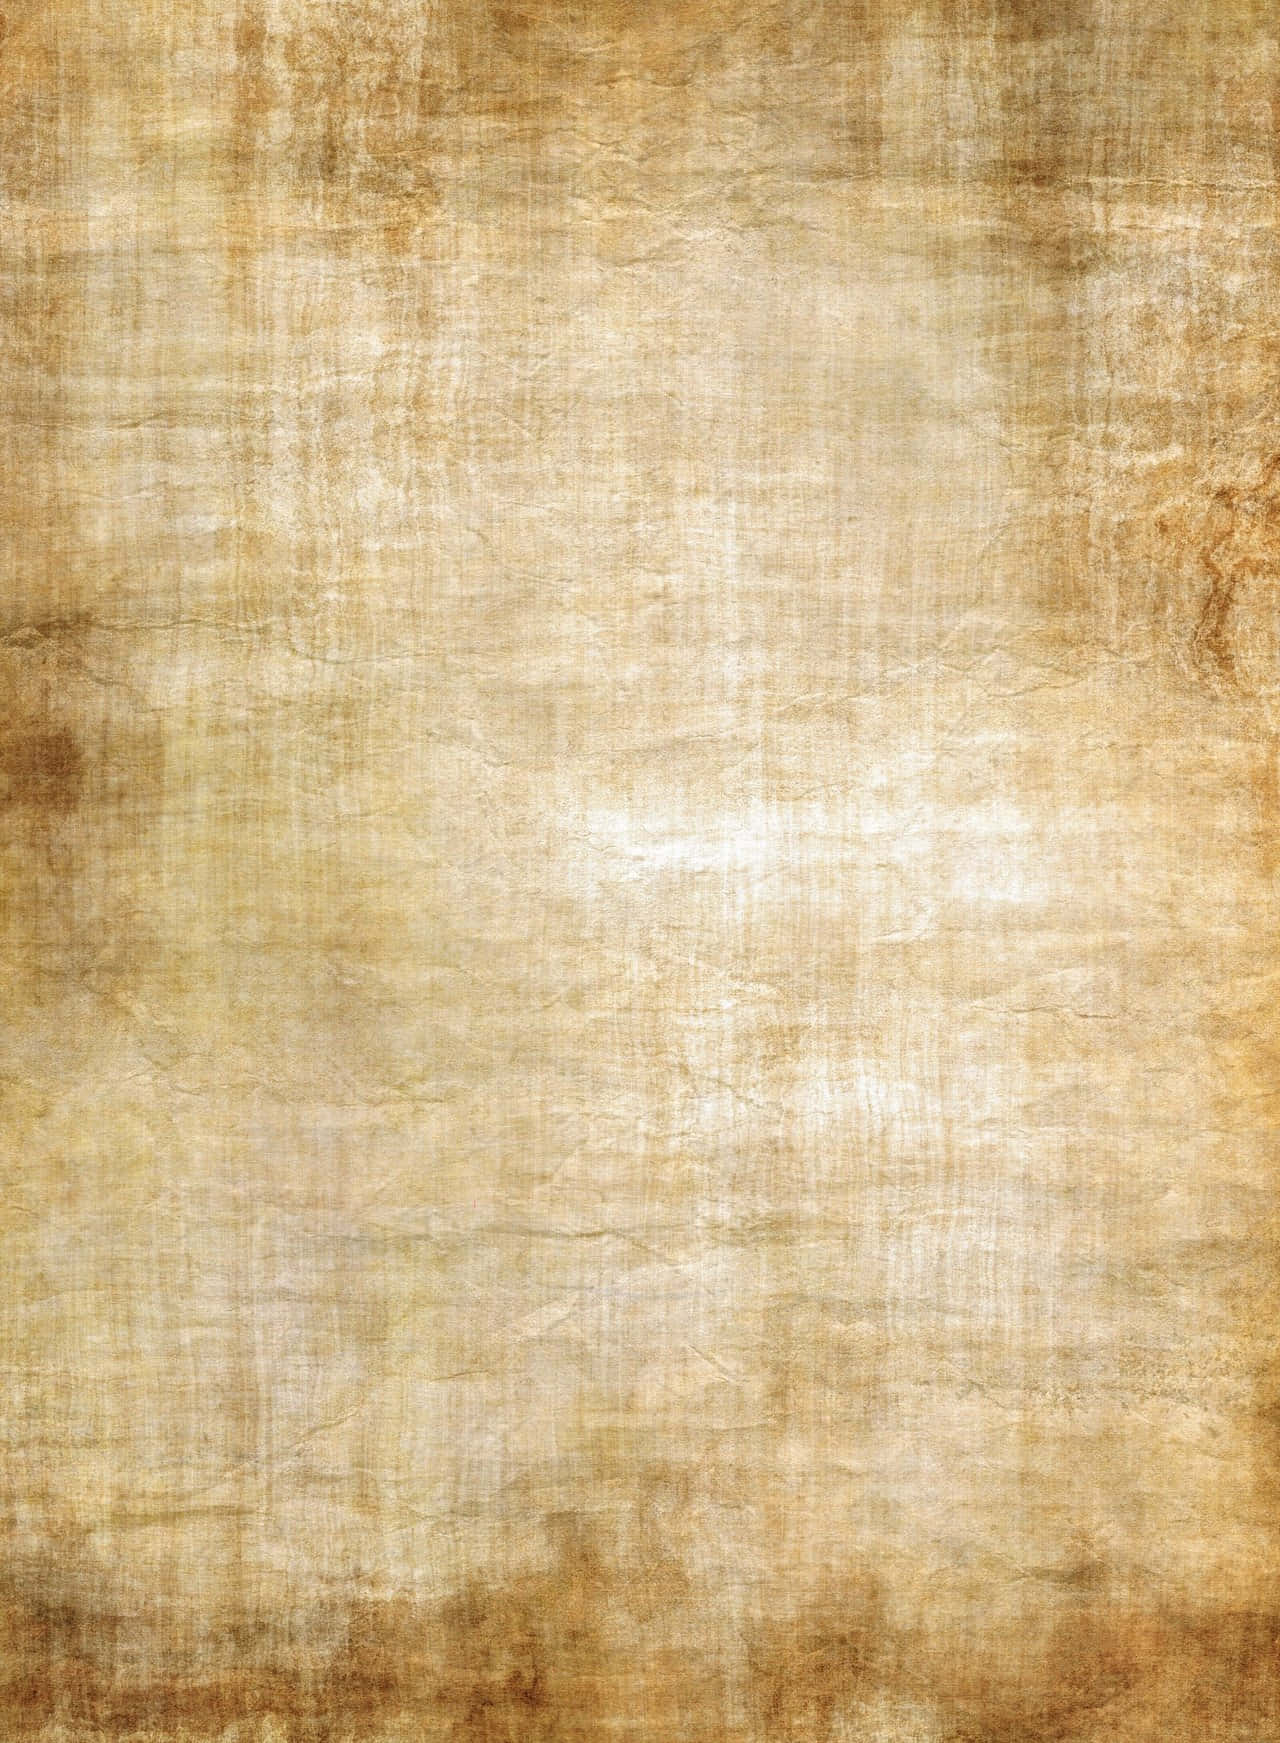 Parchment Paper Background Horixontal Vertical Background